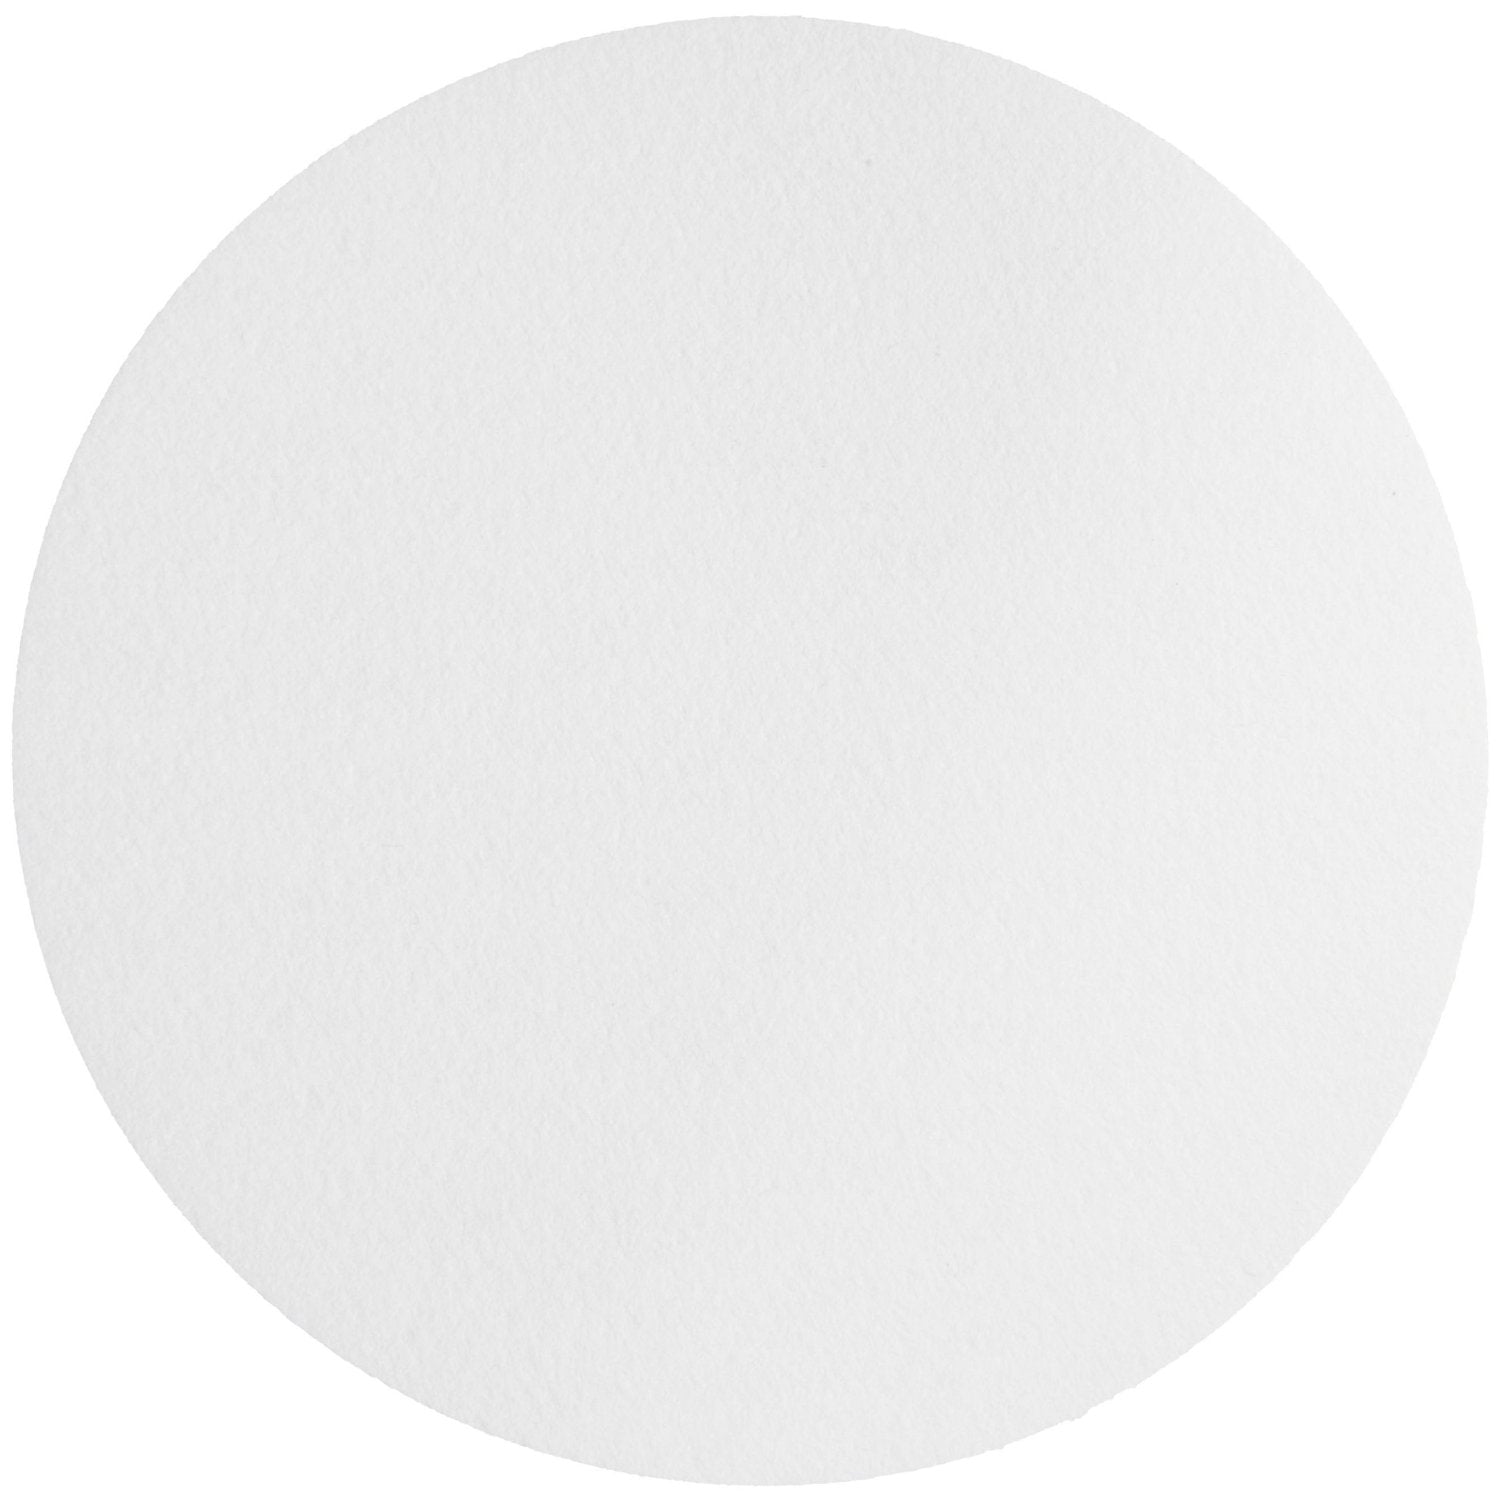 Whatman 10400206 Cellulose Nitrate, 25mm Dia, 5.0 micrometer Pore Size, Plain White, 100/pk (PN: 10400206)